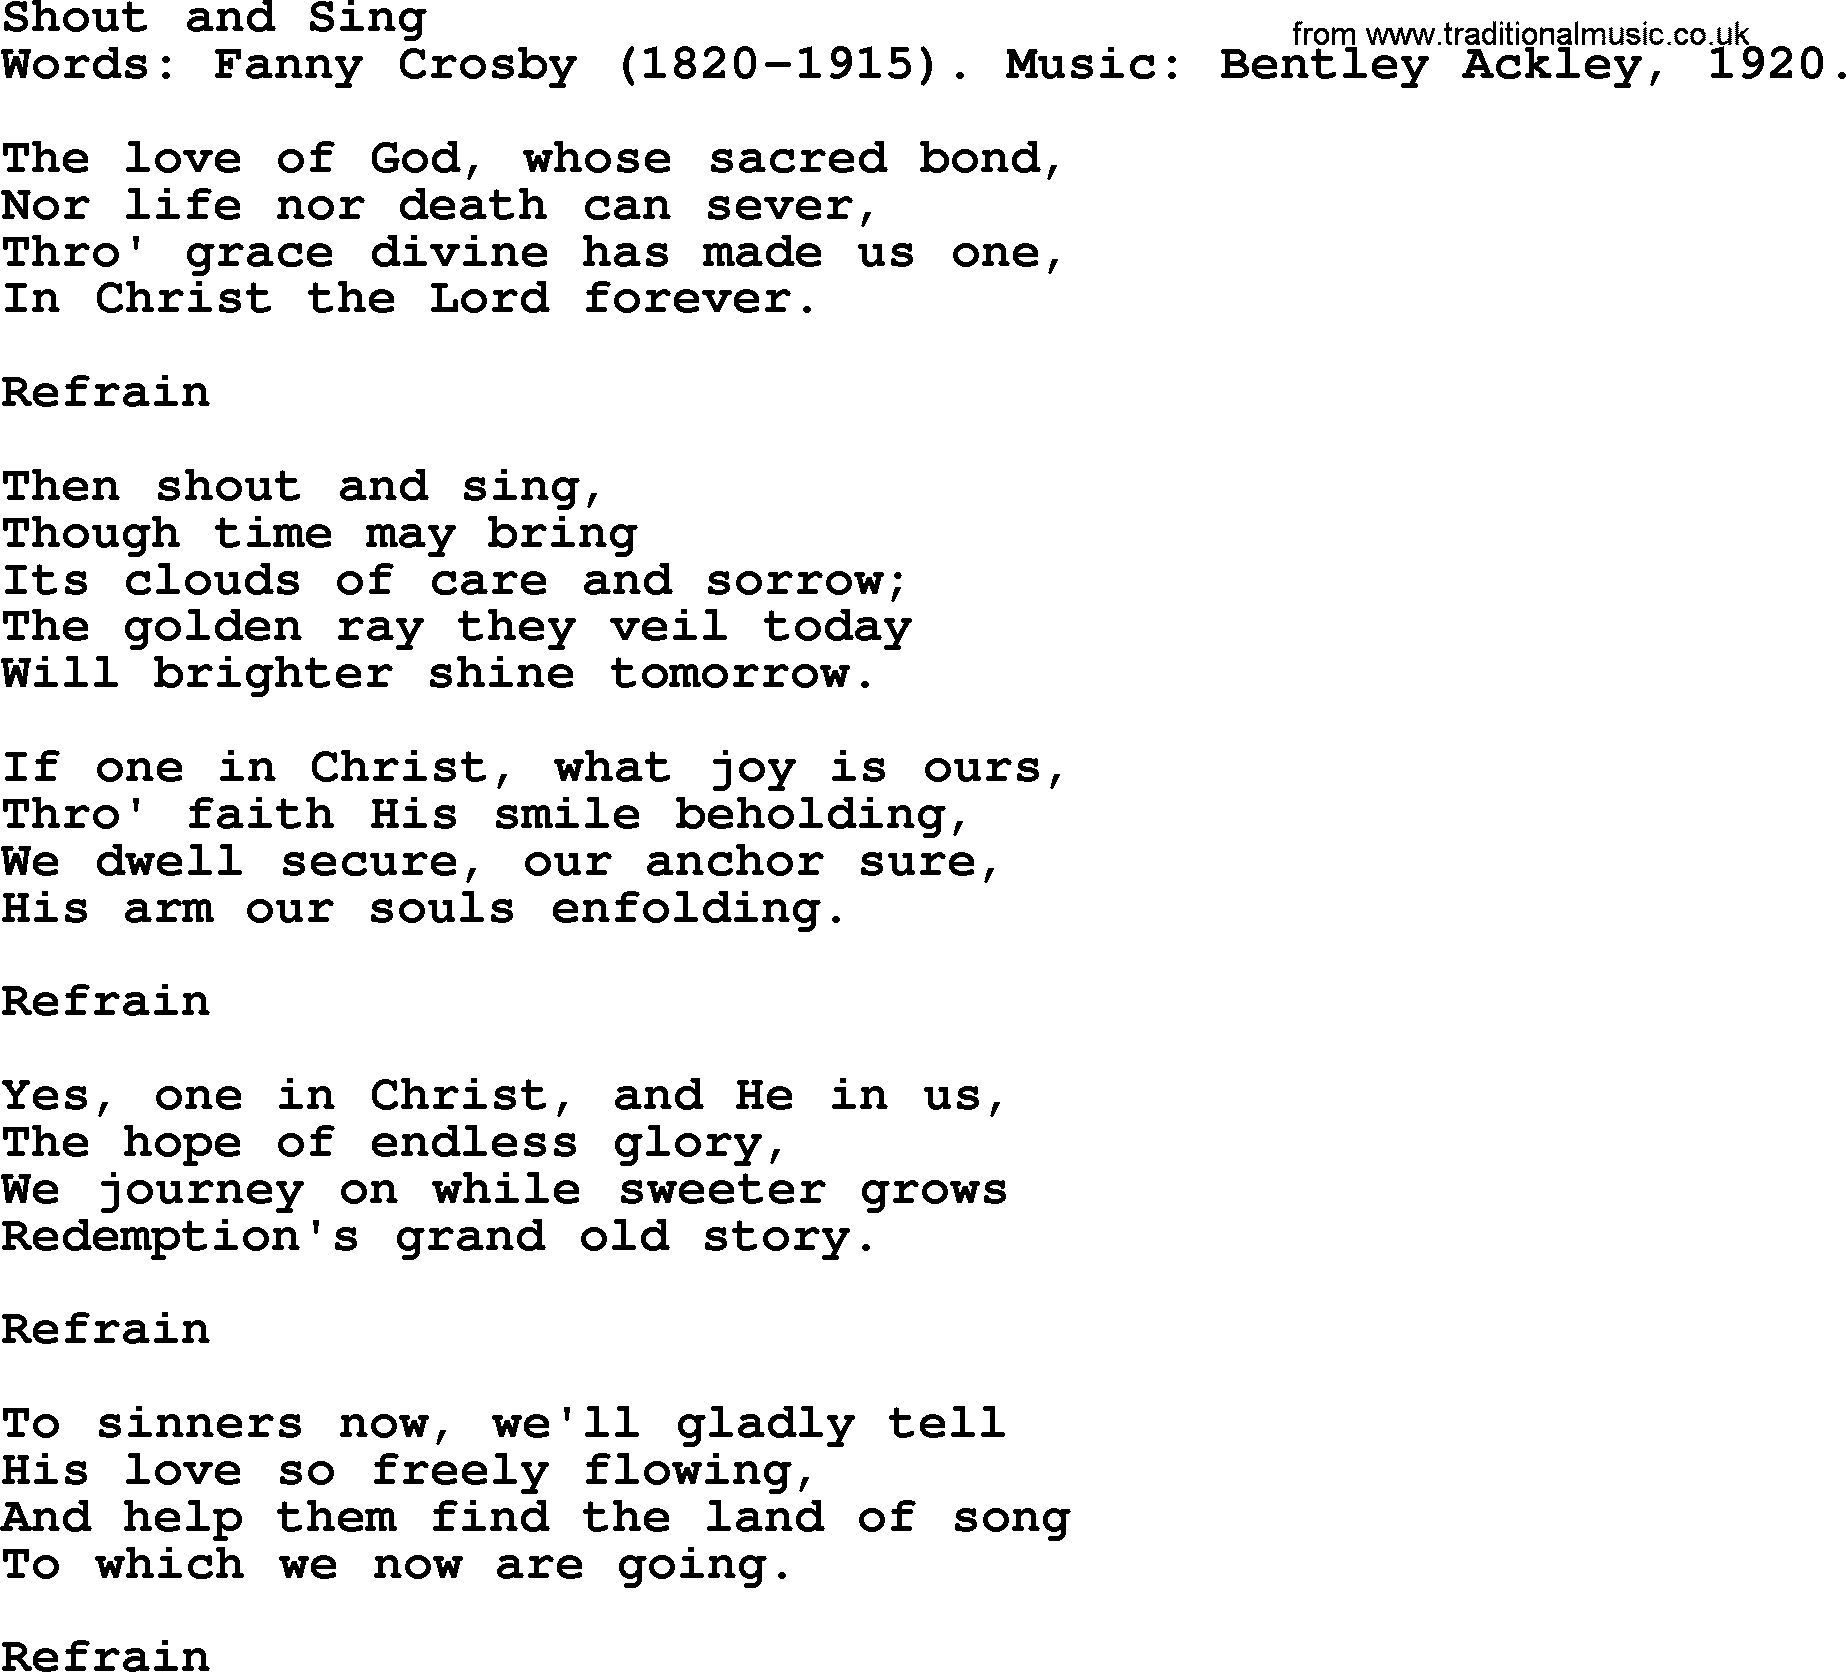 Fanny Crosby song: Shout And Sing, lyrics